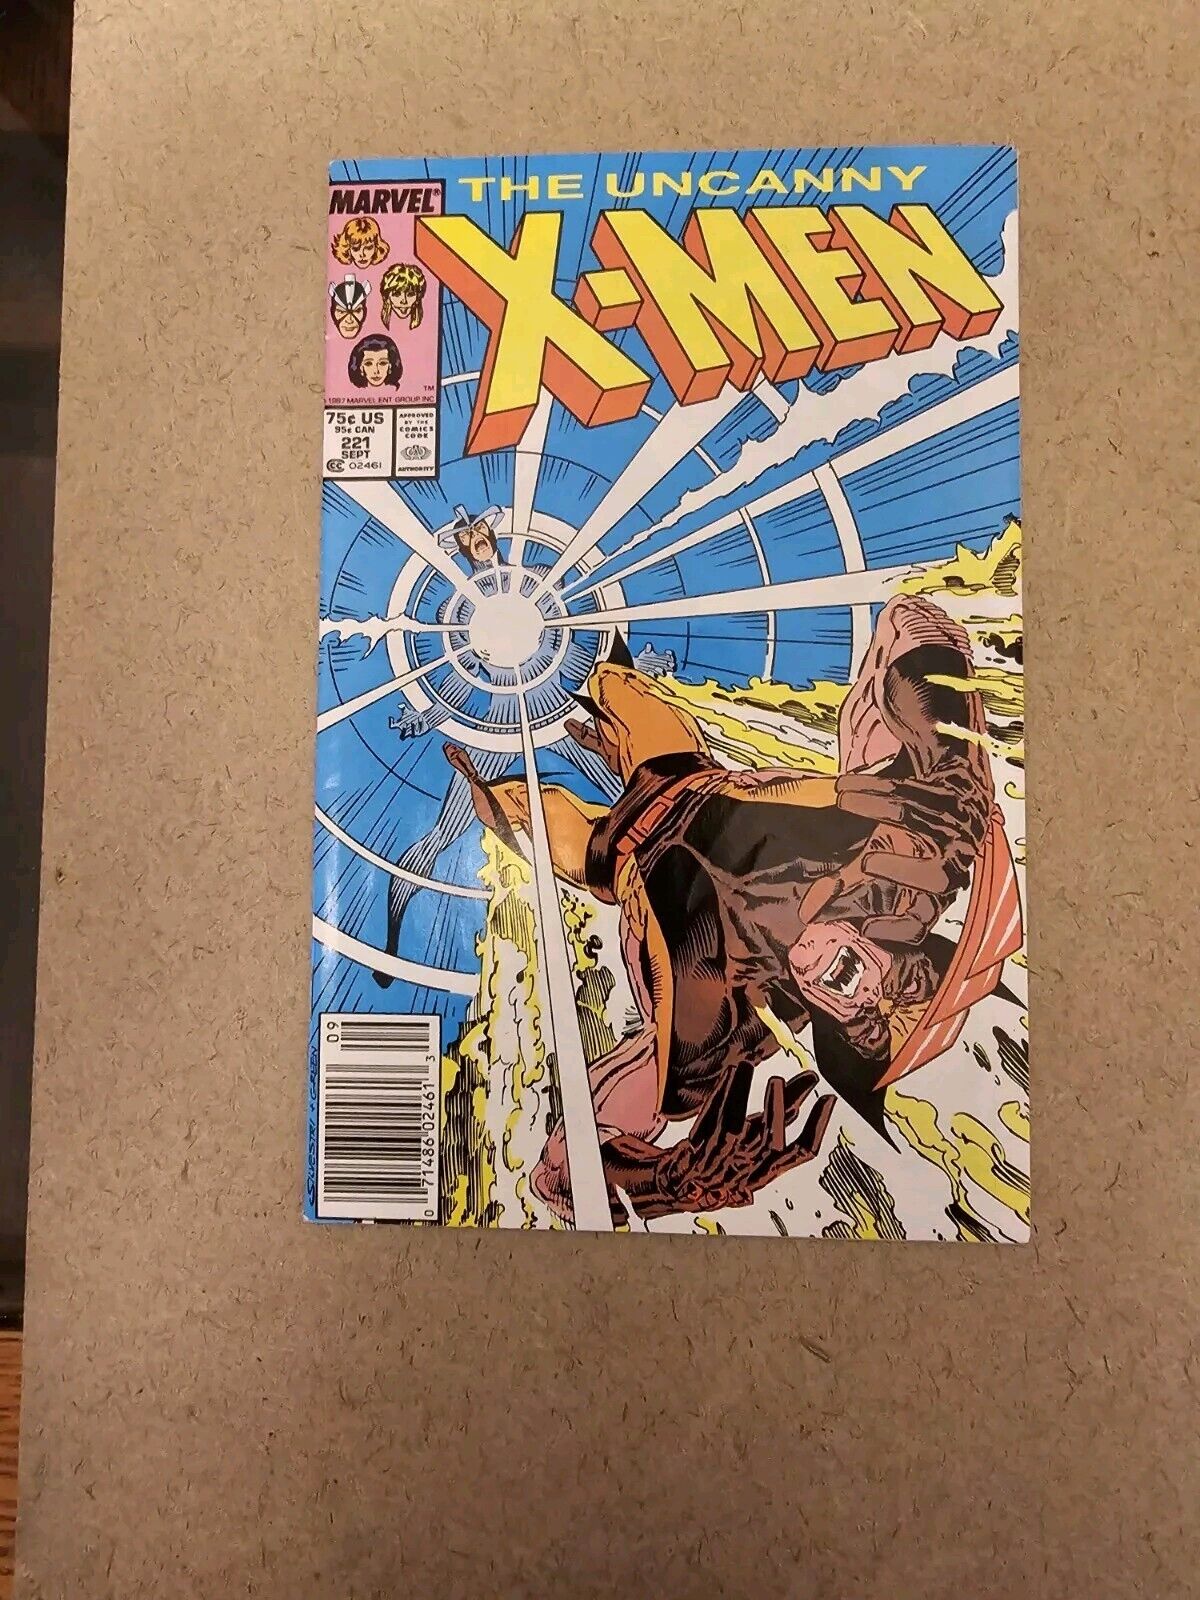 The Uncanny X-Men #221 (Marvel Comics September 1987)